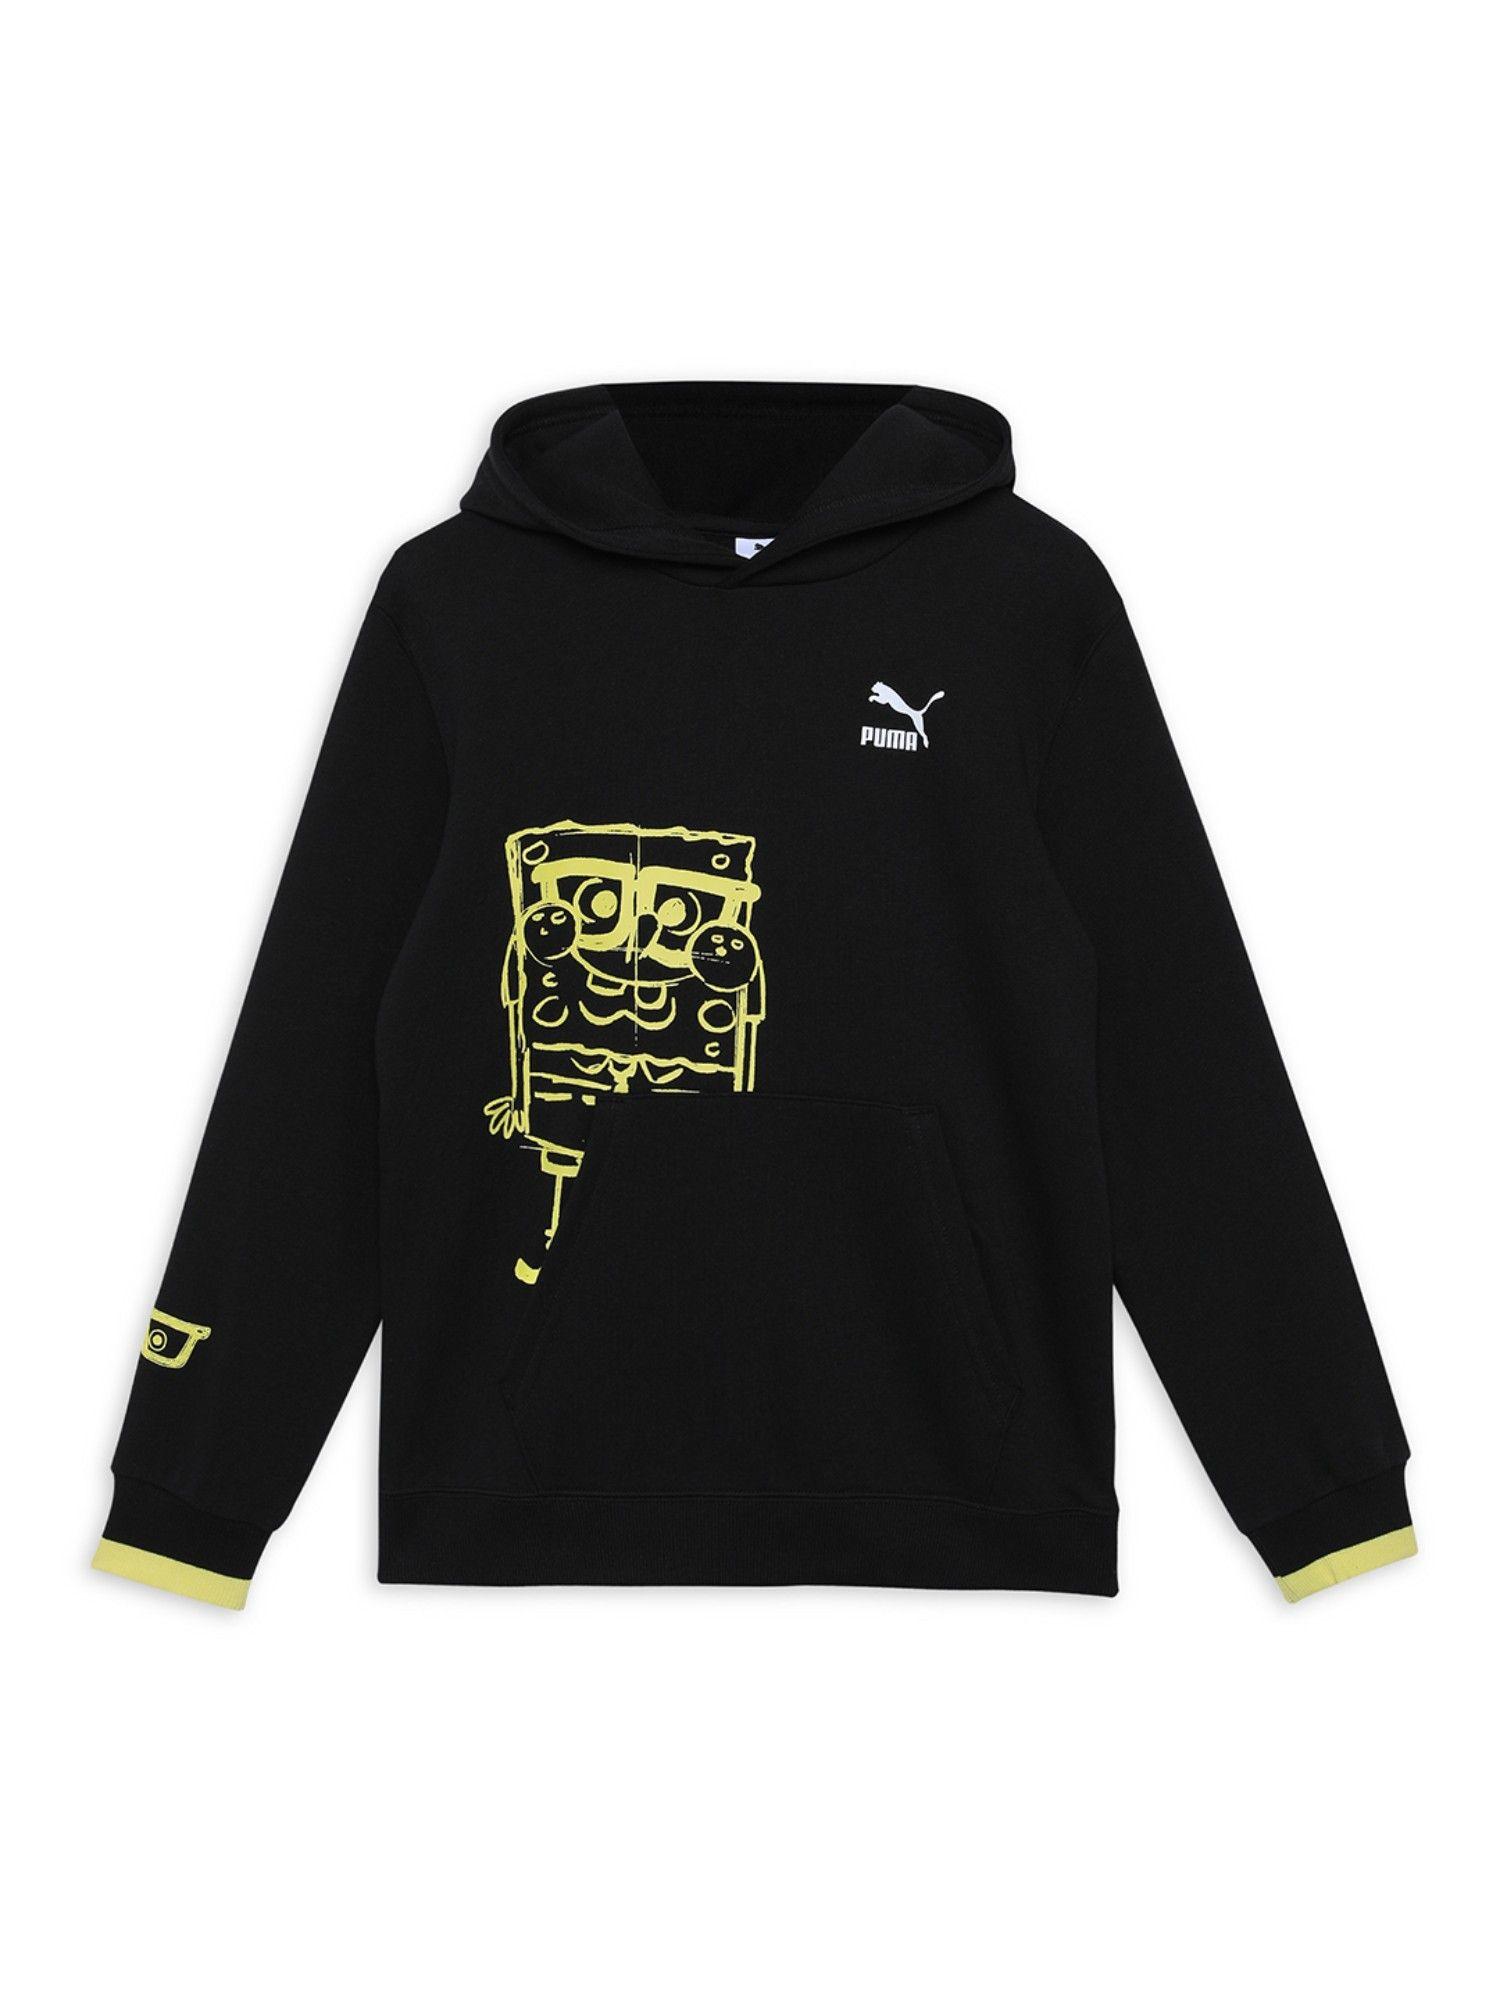 x-spongebob-boys-black-hoodie